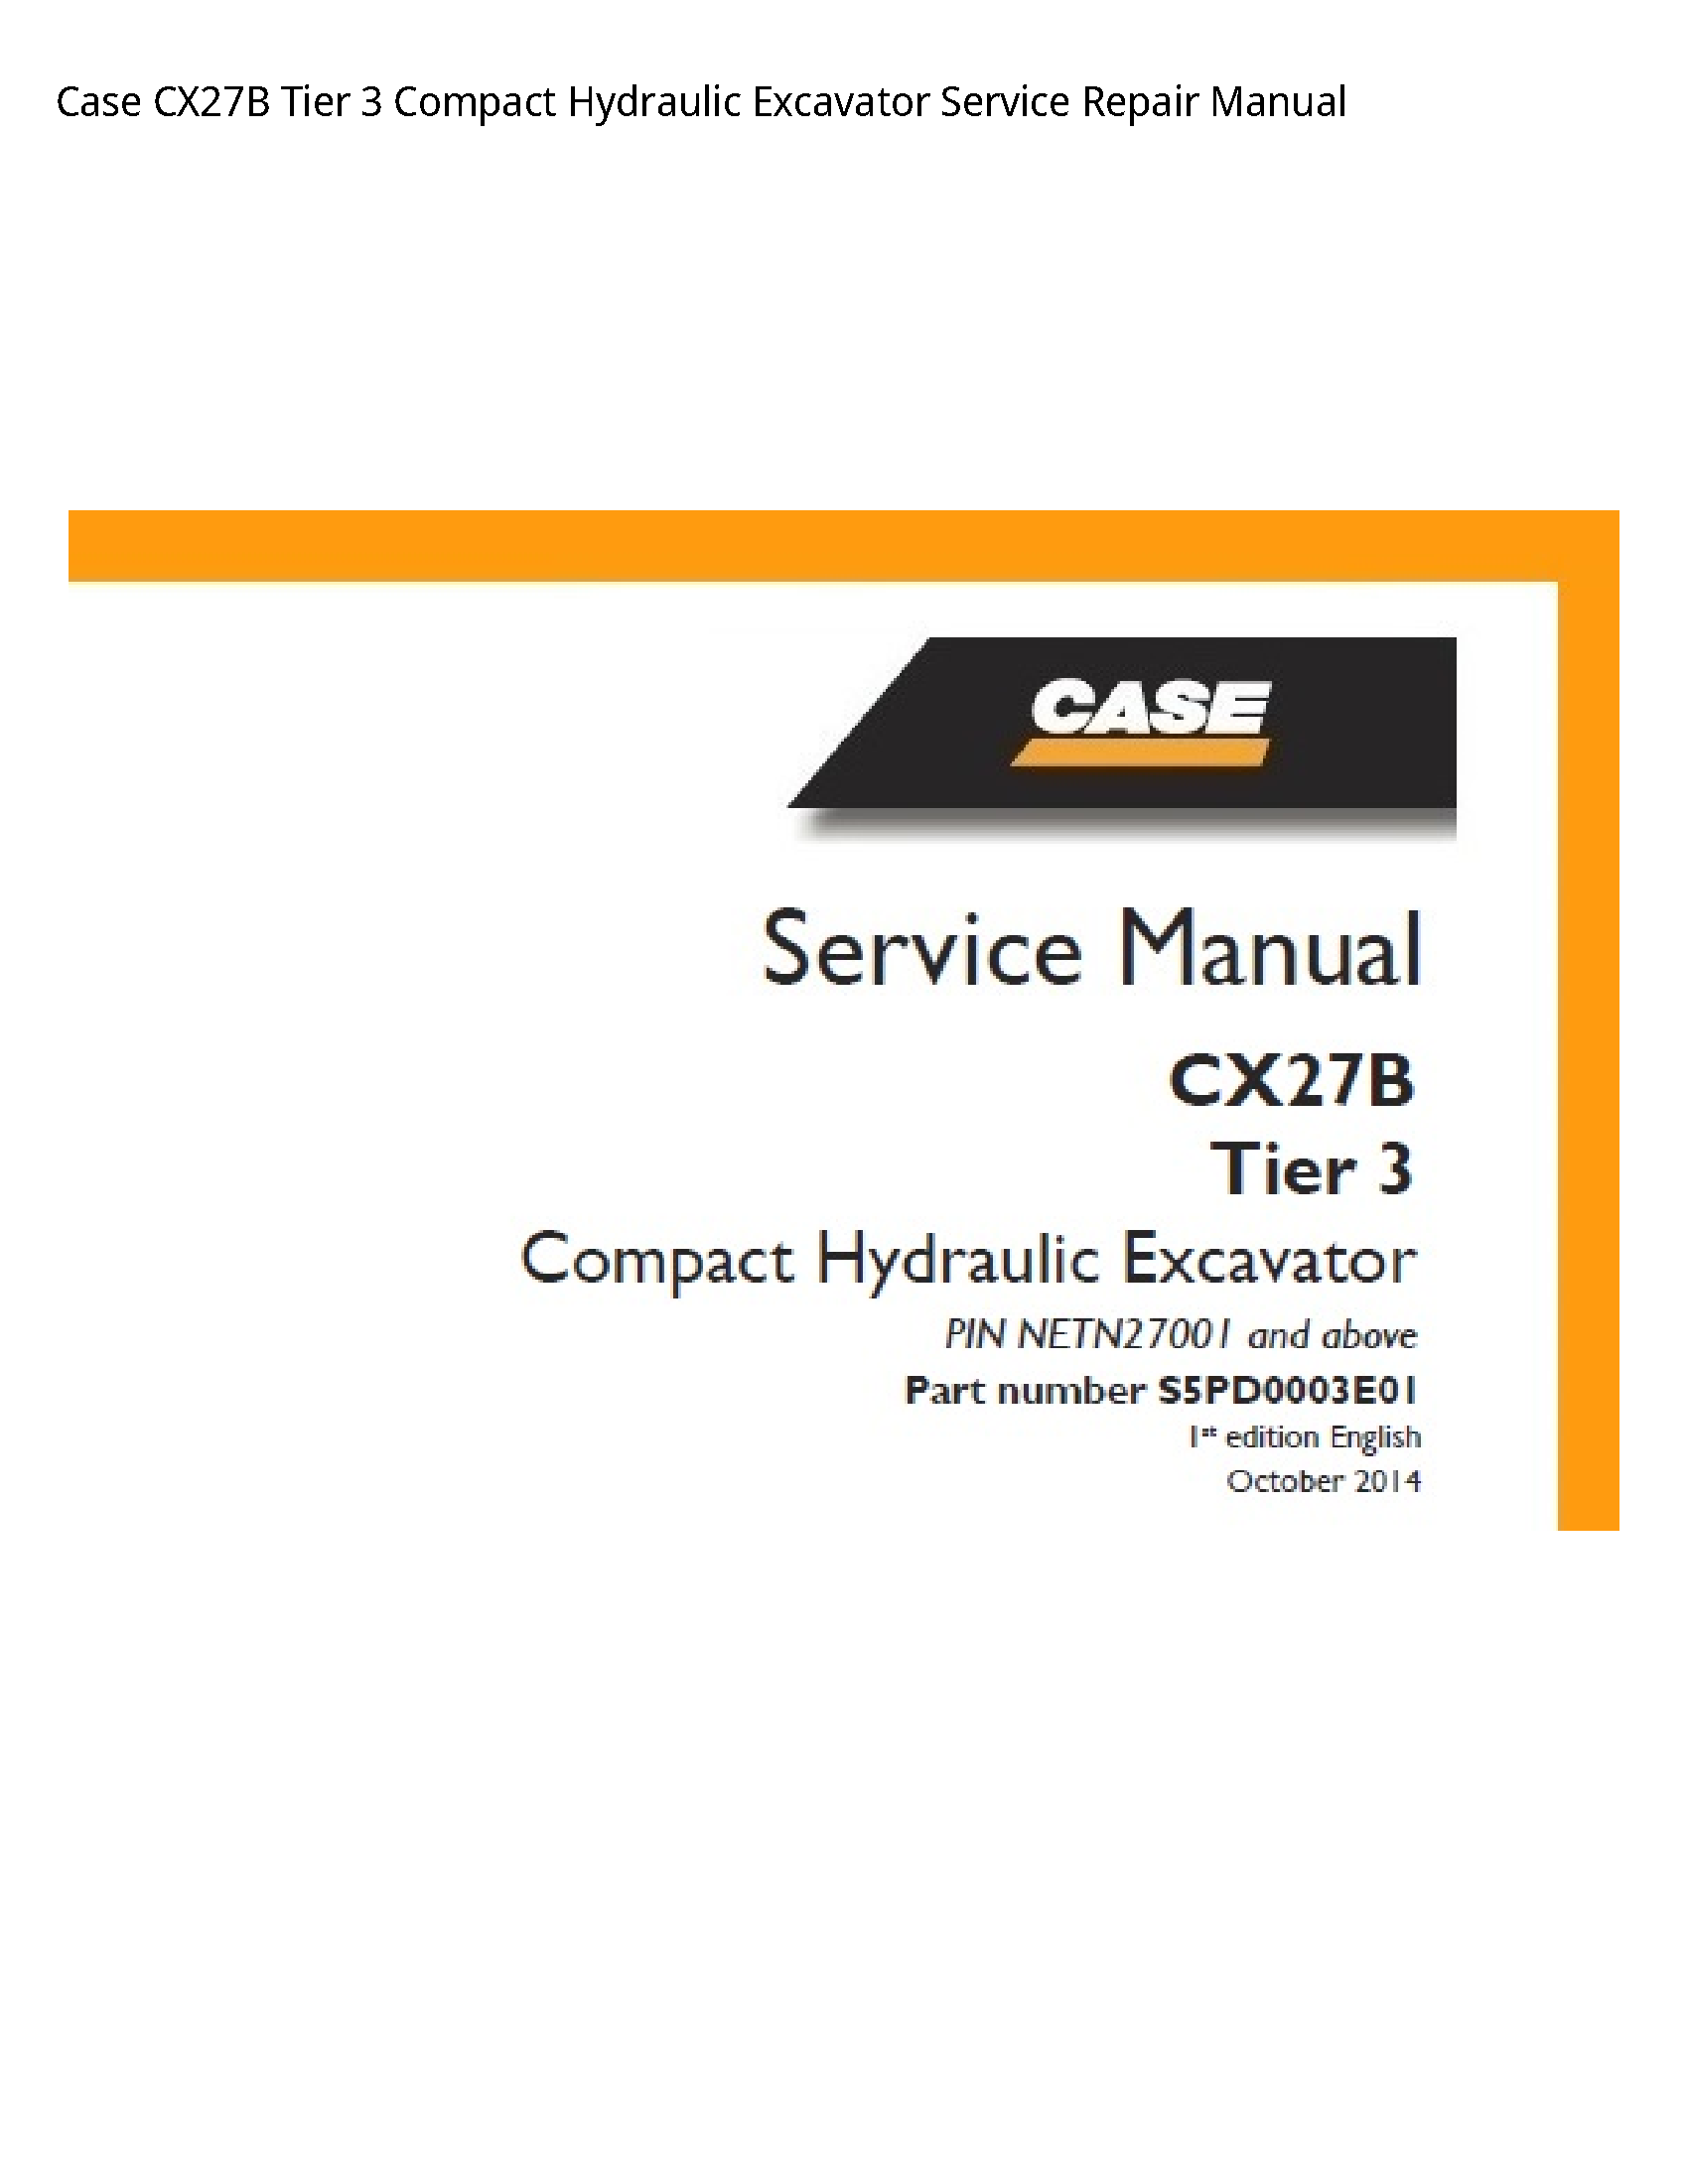 Case/Case IH CX27B Tier Compact Hydraulic Excavator manual